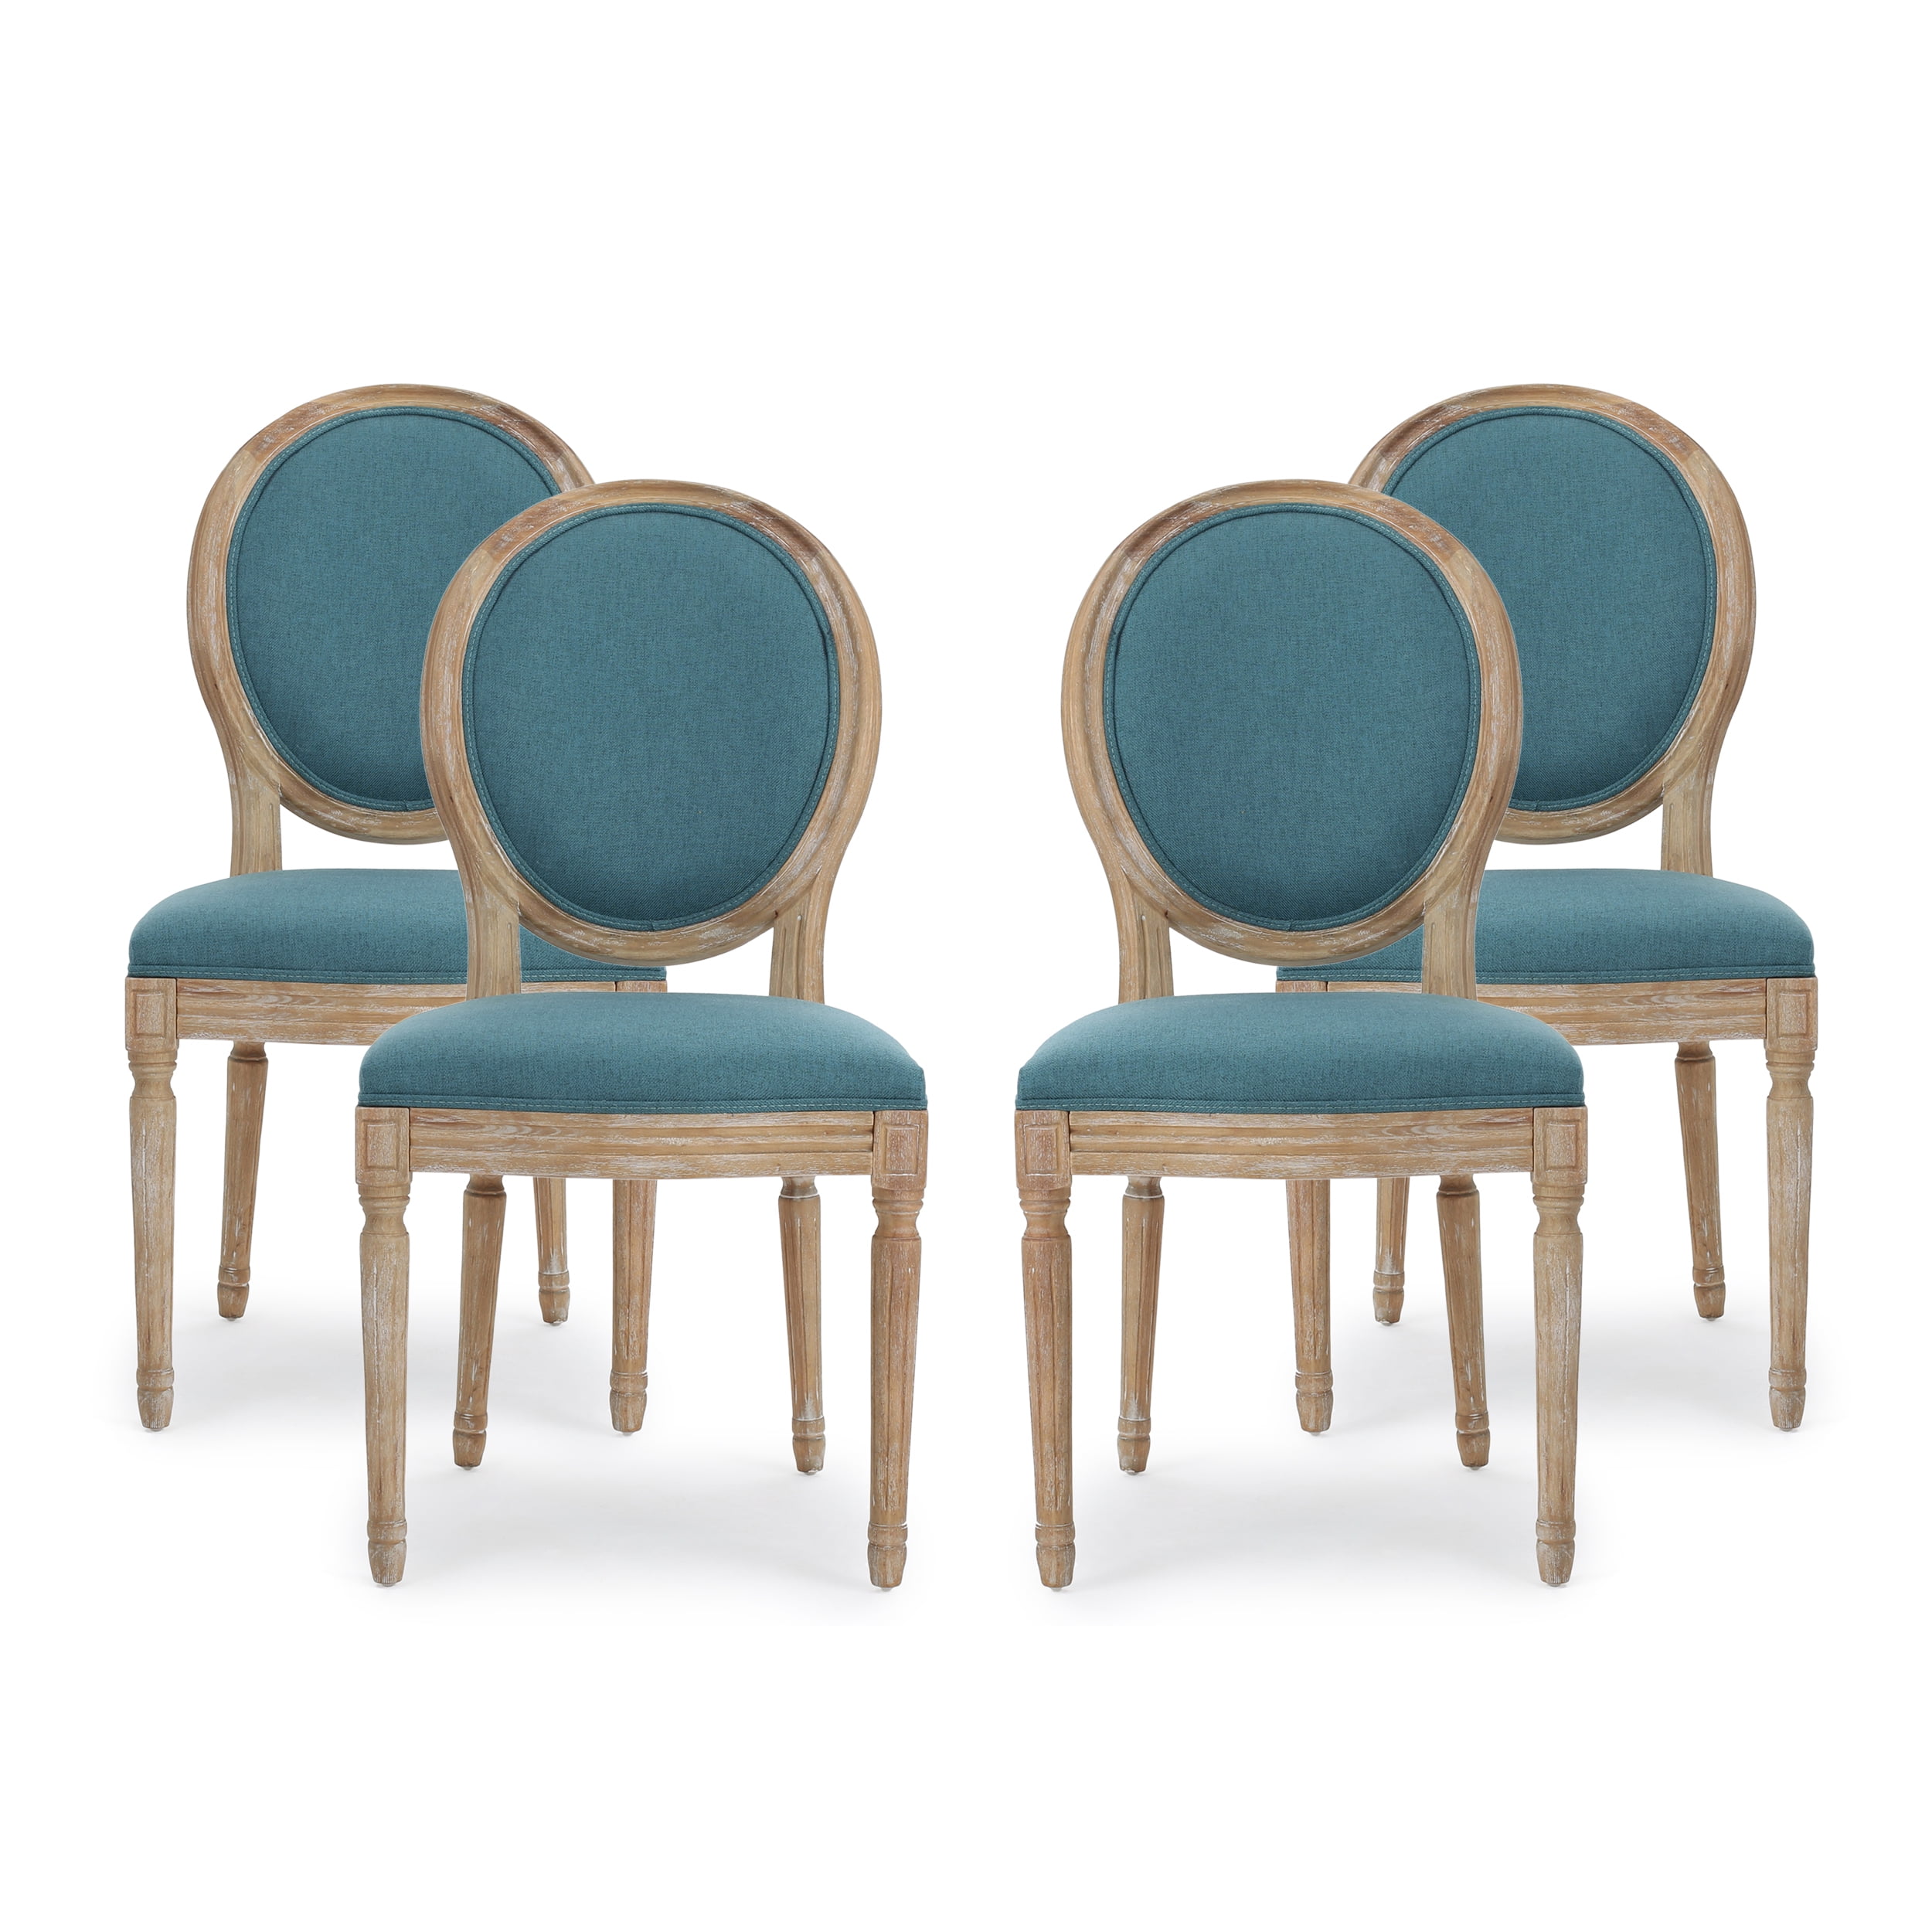 Lariya French Country Fabric Dining, Dining Room Chairs Set Of 4 Dark Wood